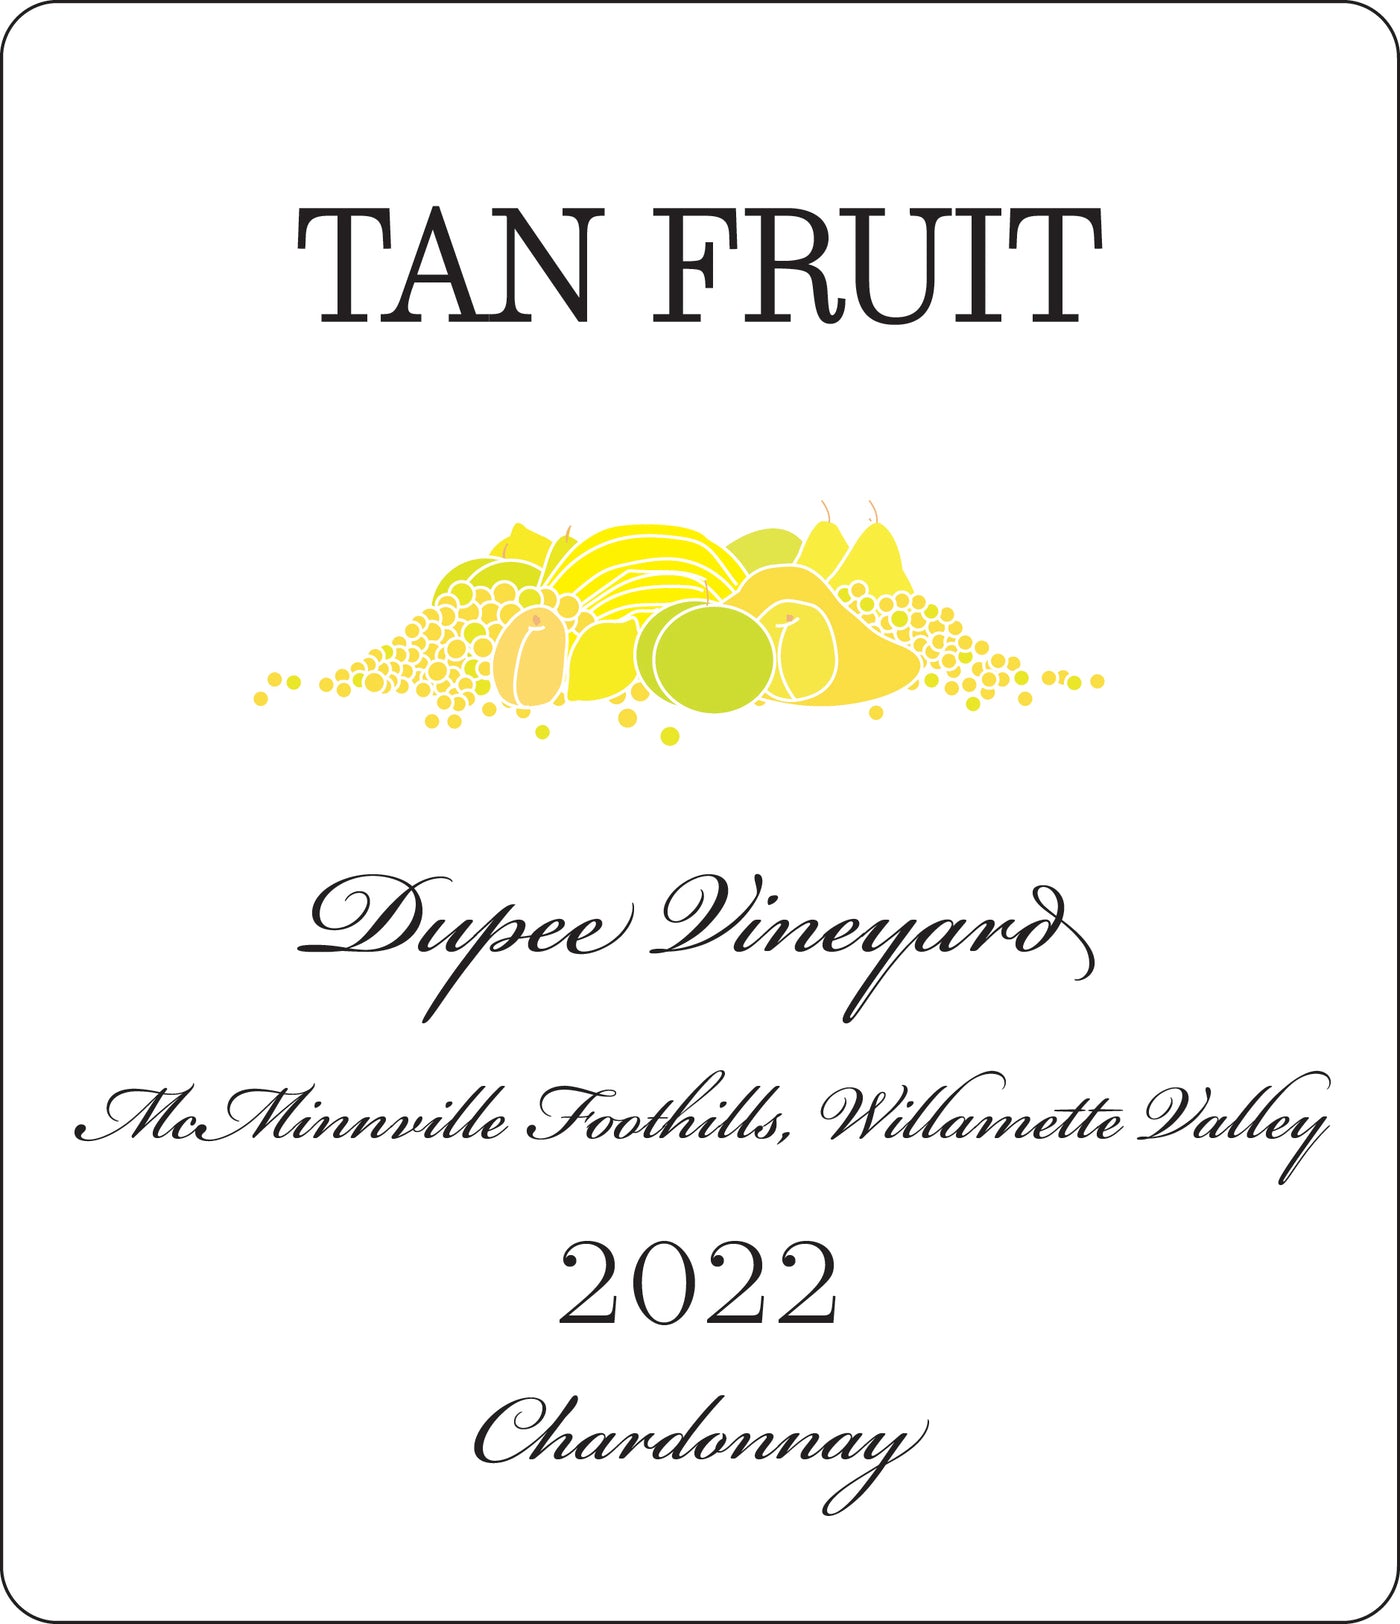 Tan Fruit Dupee Vineyard Chardonnay 2022